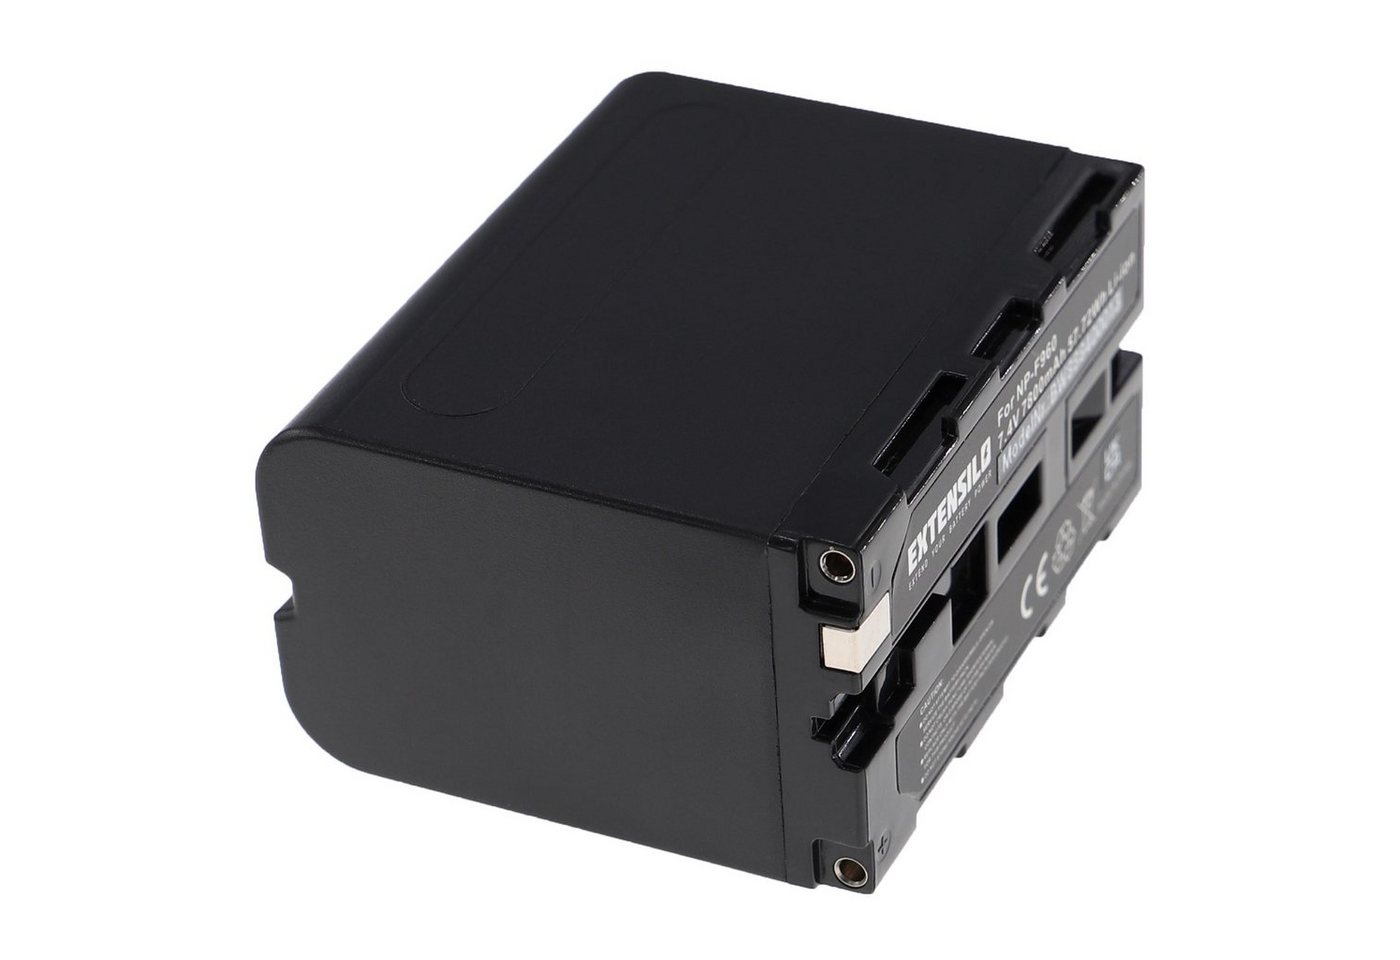 Extensilo kompatibel mit Atomos Ninja 10-bit DTE field recorder Kamera-Akku Li-Ion 7800 mAh (7,4 V) von Extensilo